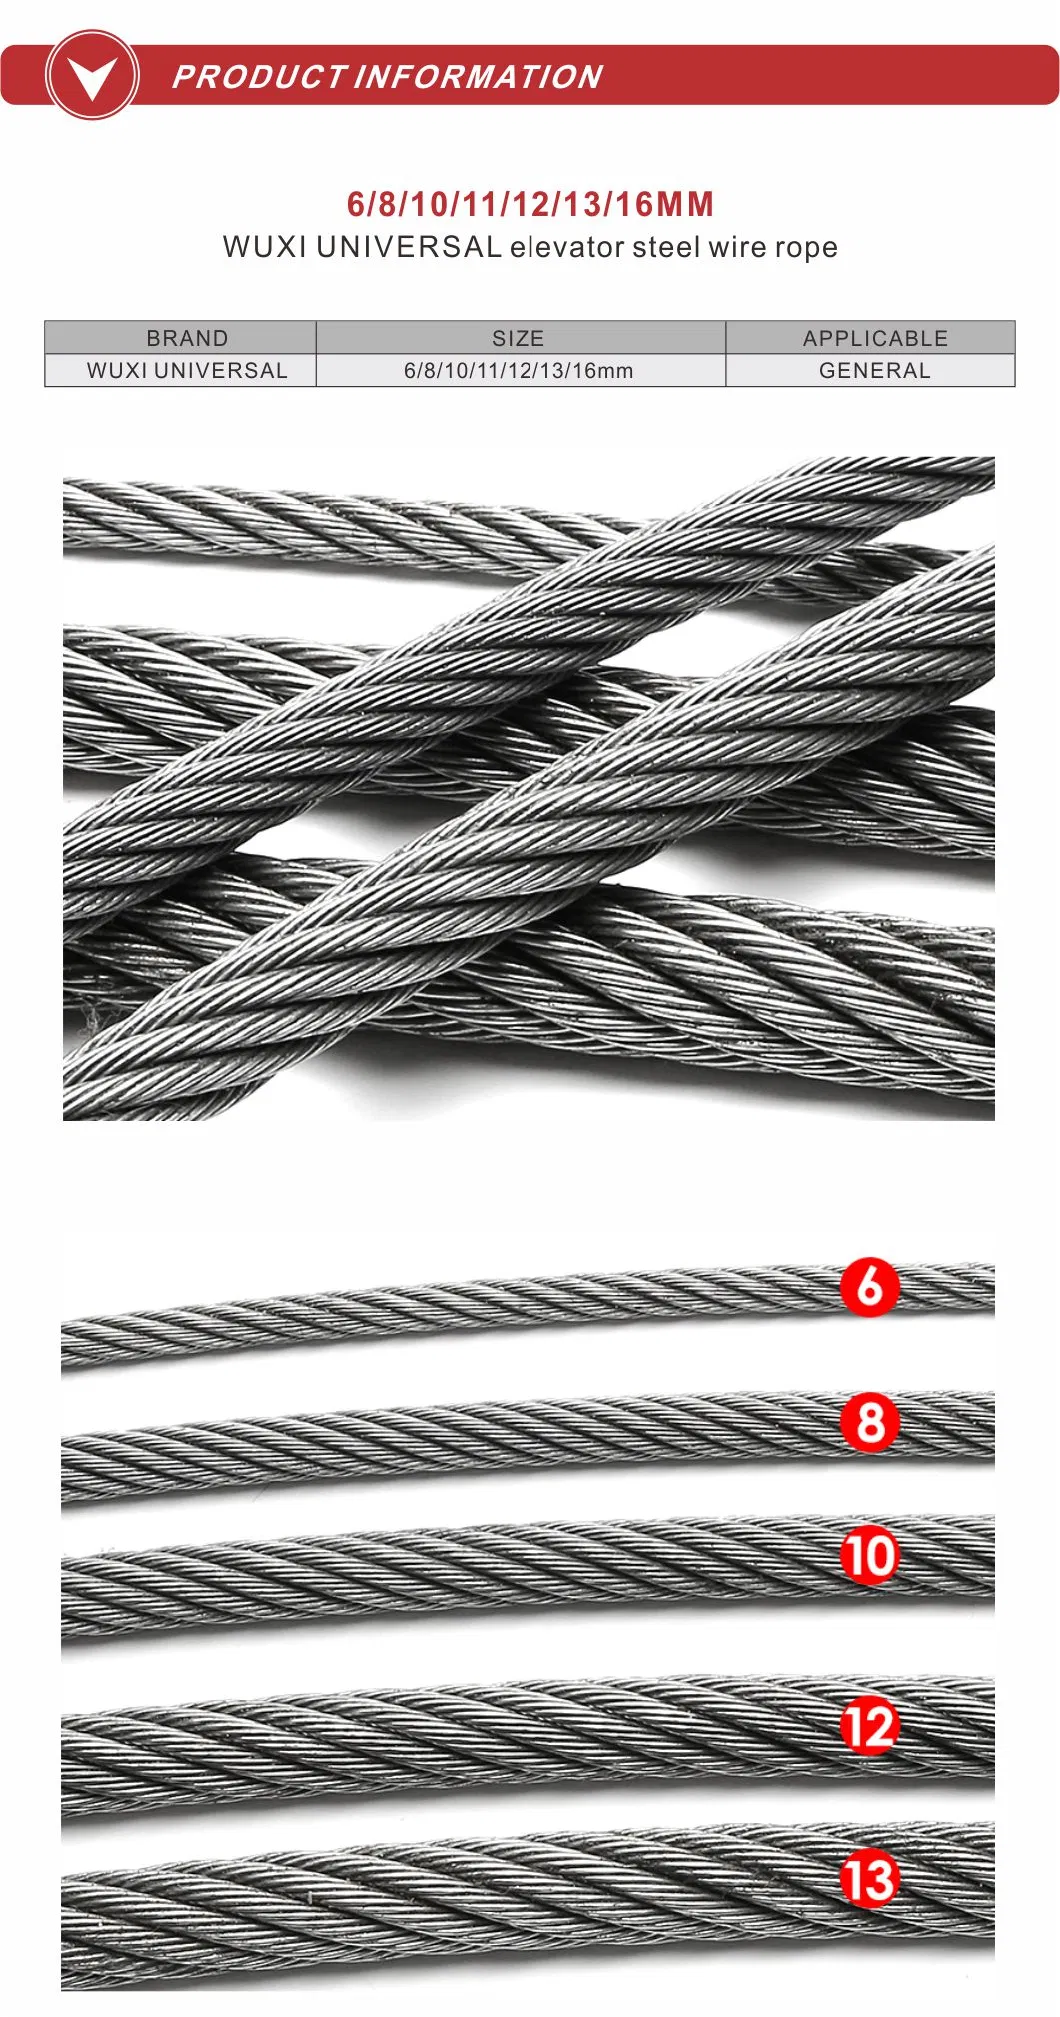 Wuxi Universal Elevator Steel Wire Rope 6/8/10/11/12/13/16mm